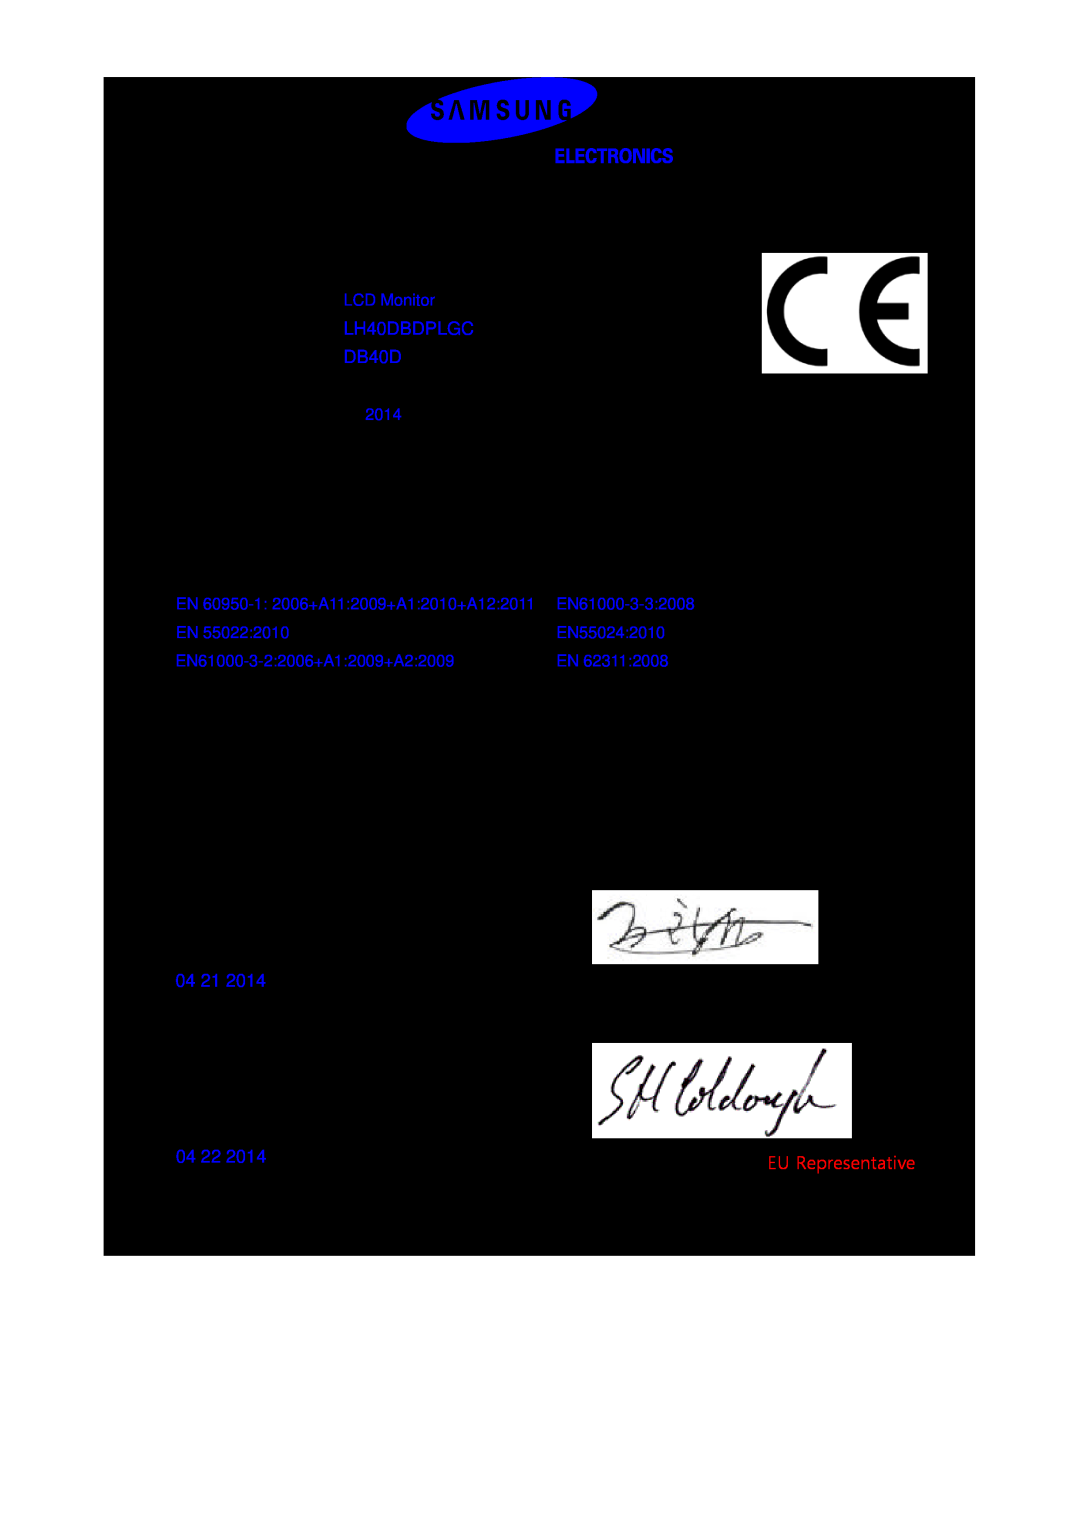 Samsung LH48DBDPLGC/EN, LH32DBDPLGC/EN, LH40DBDPLGC/EN manual Declaration of Conformity, LH55DBDPLGC, DB55D, 04 21, 04 22 